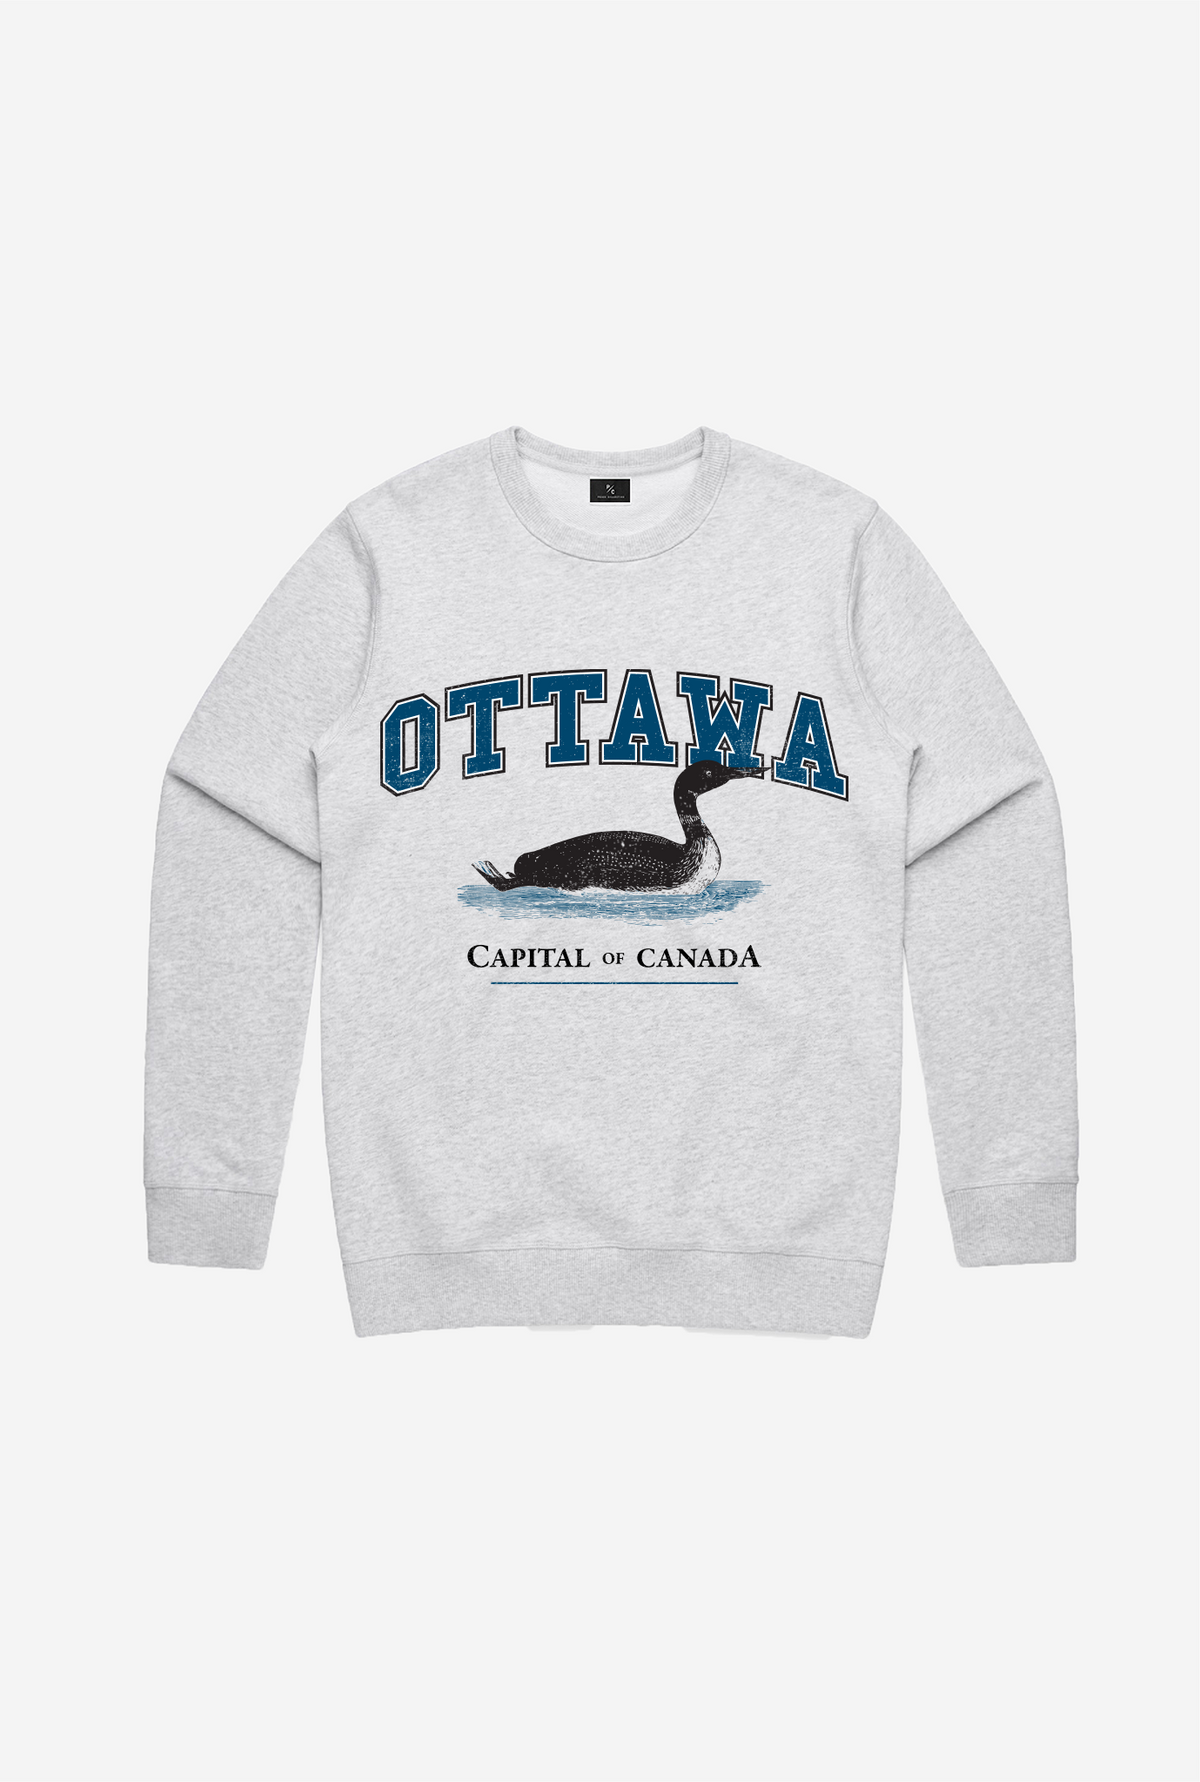 Ottawa Vintage Crewneck - Grey